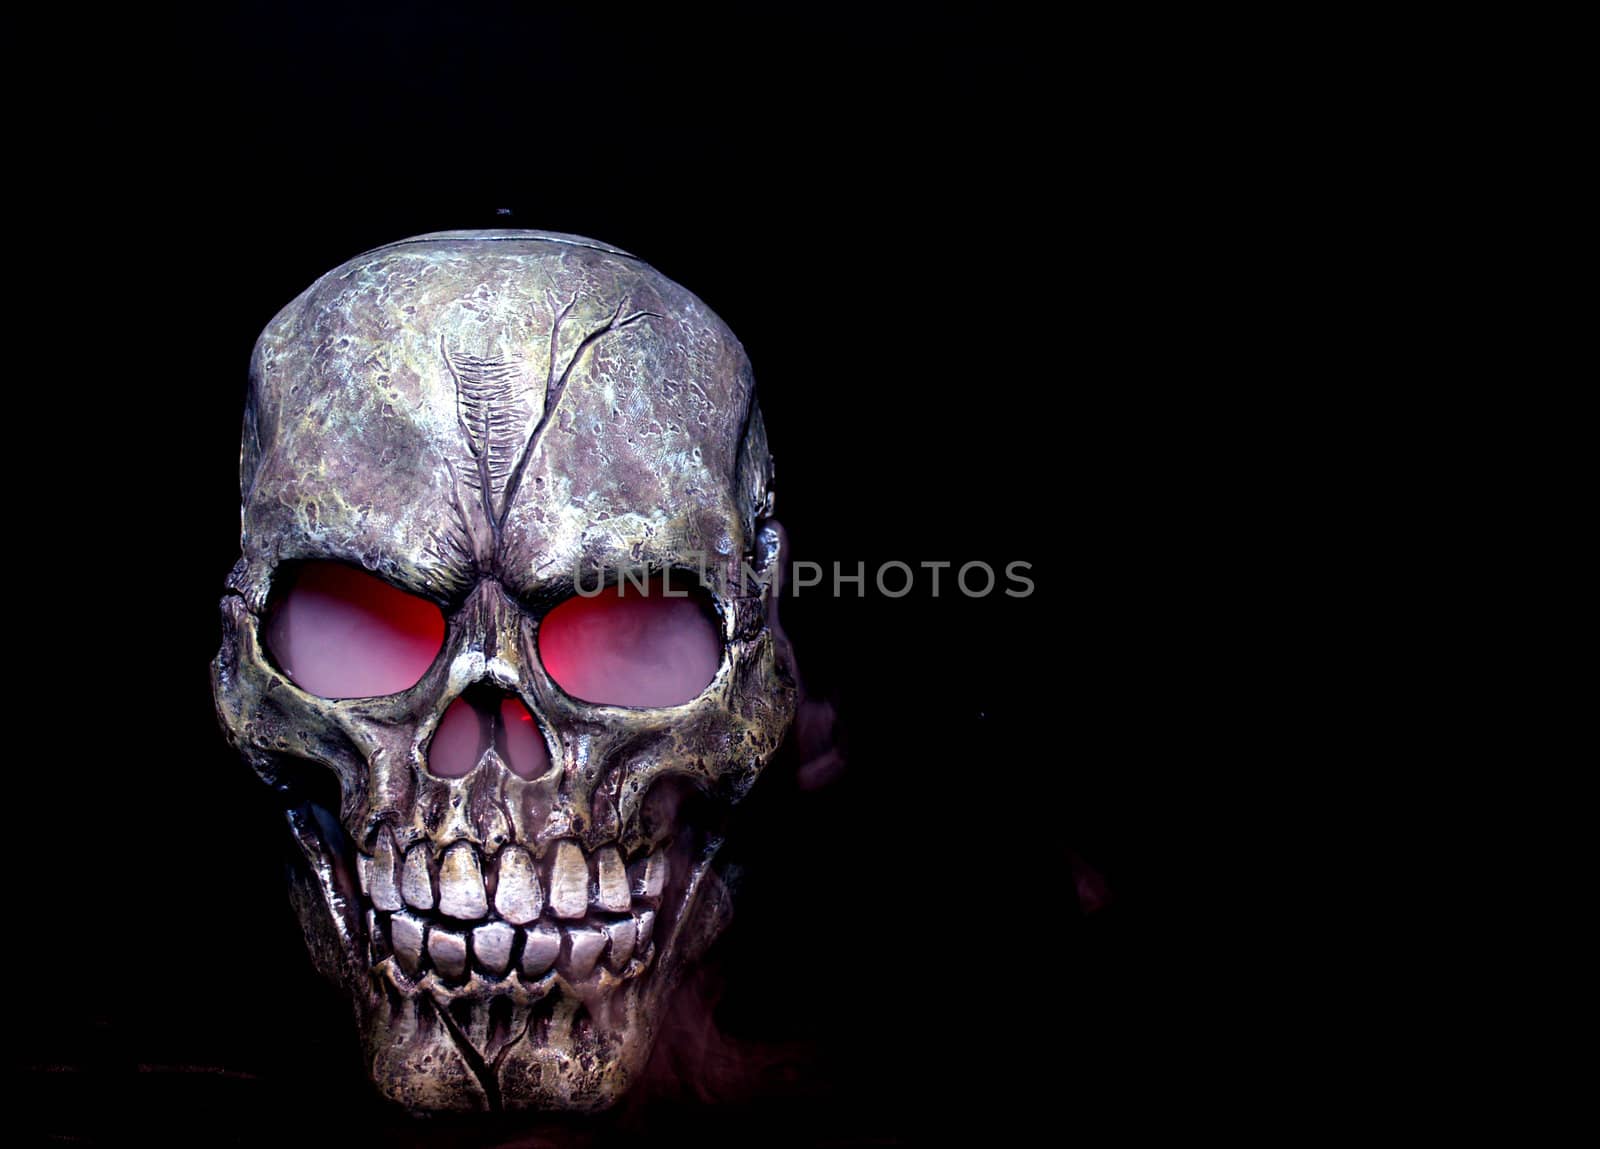 Steaming skull by chaosmediamgt